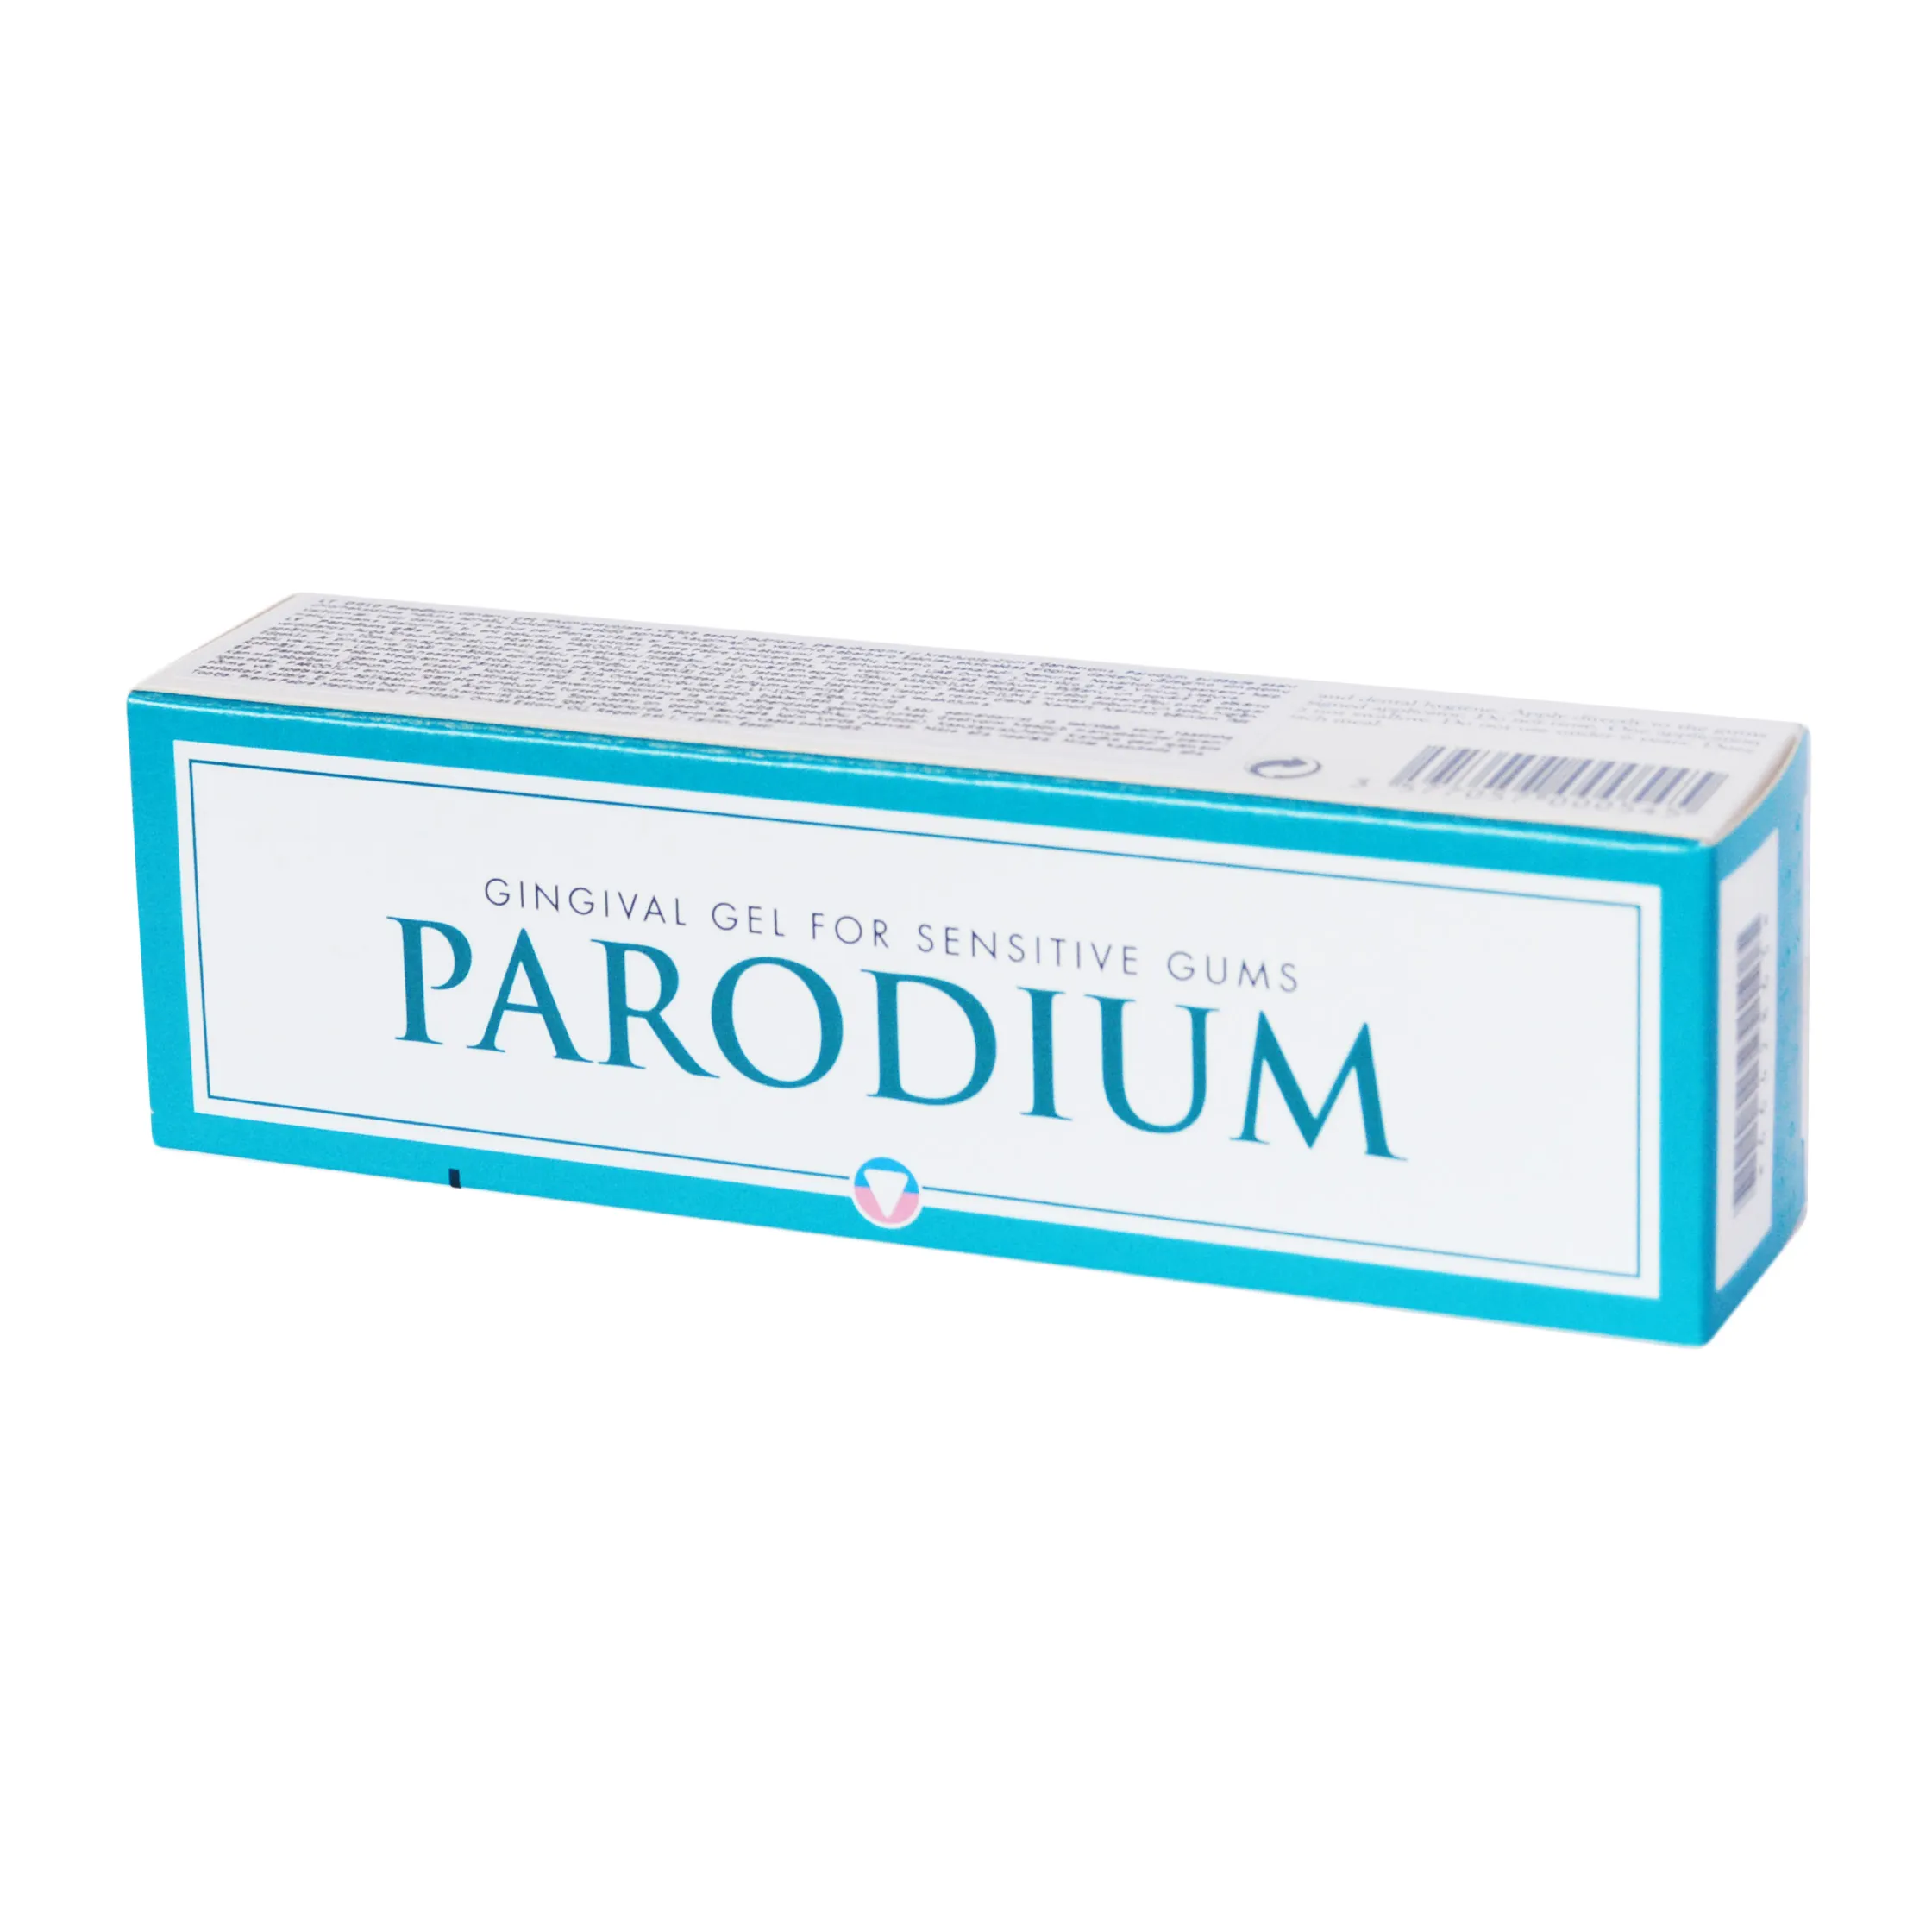 Parodium Gel gingival 50ml